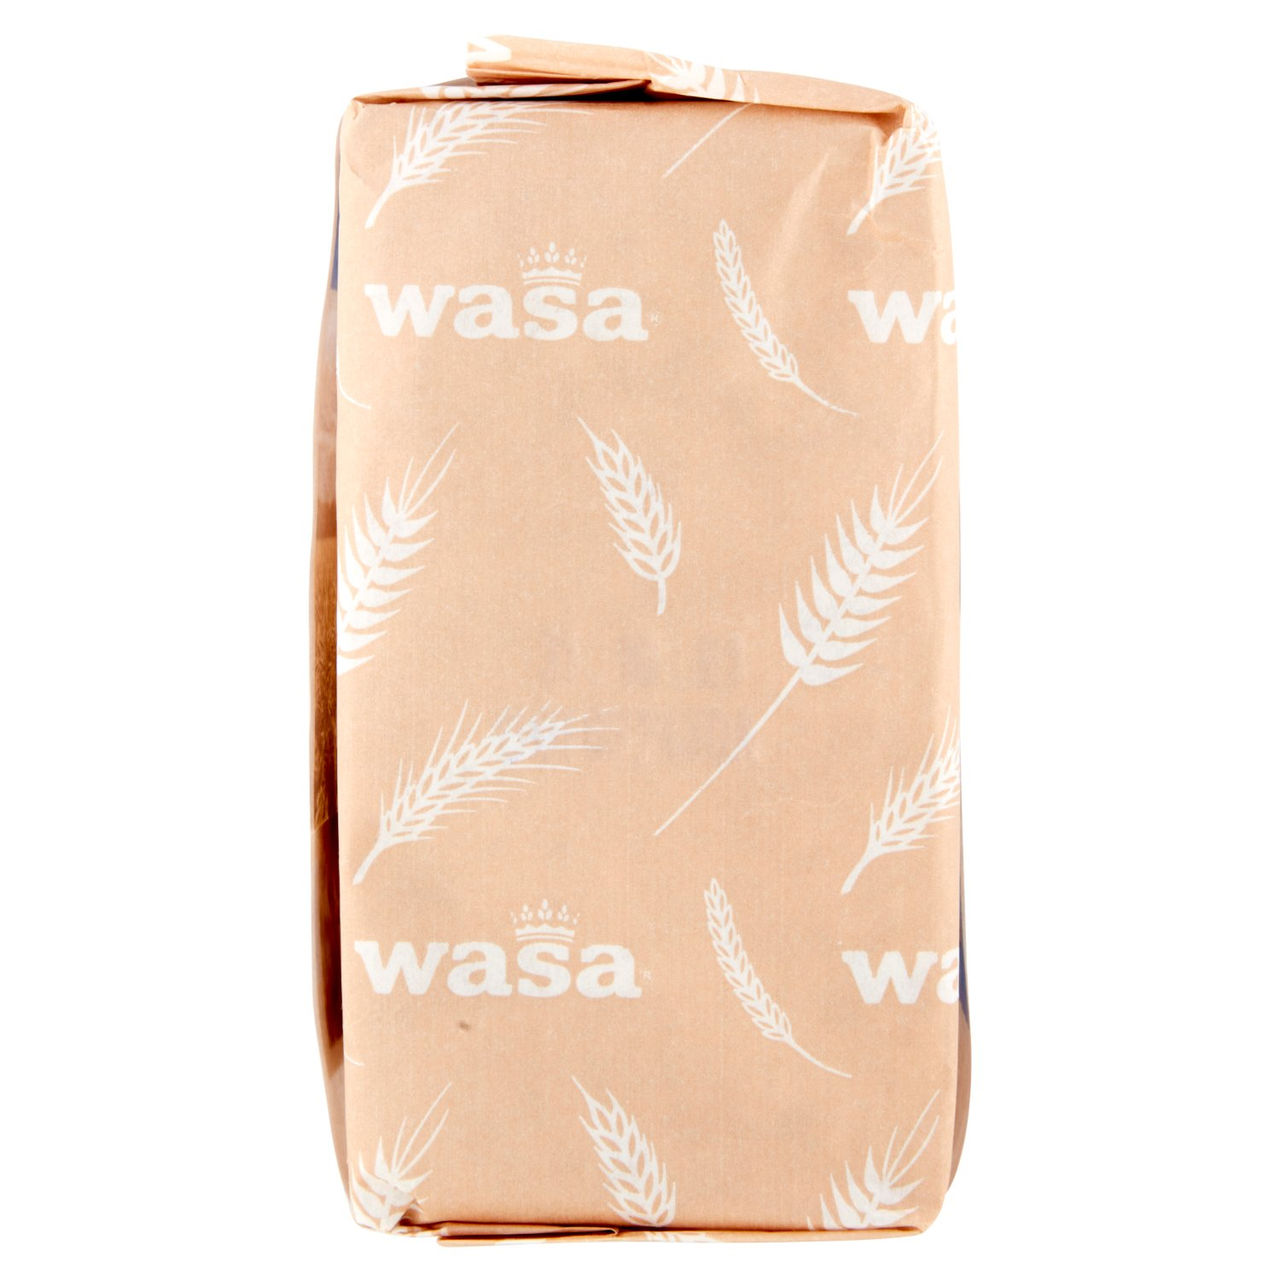 Wasa Integrale 270g in vendita online